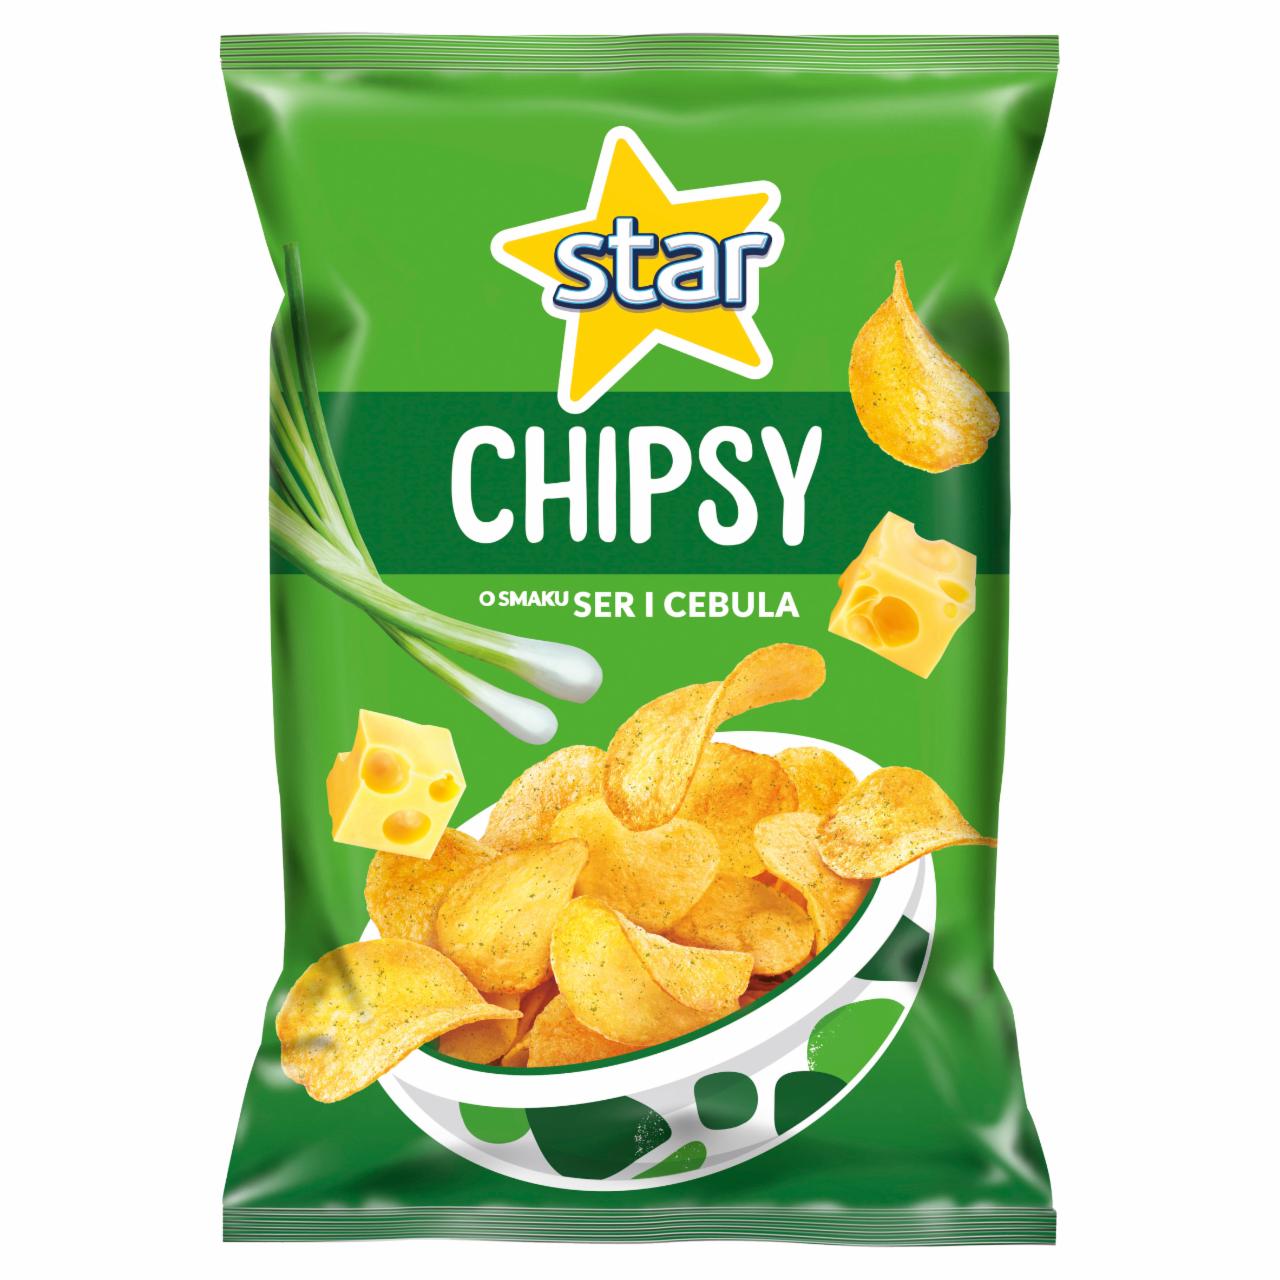 Zdjęcia - Star Chipsy o smaku ser i cebula 130 g